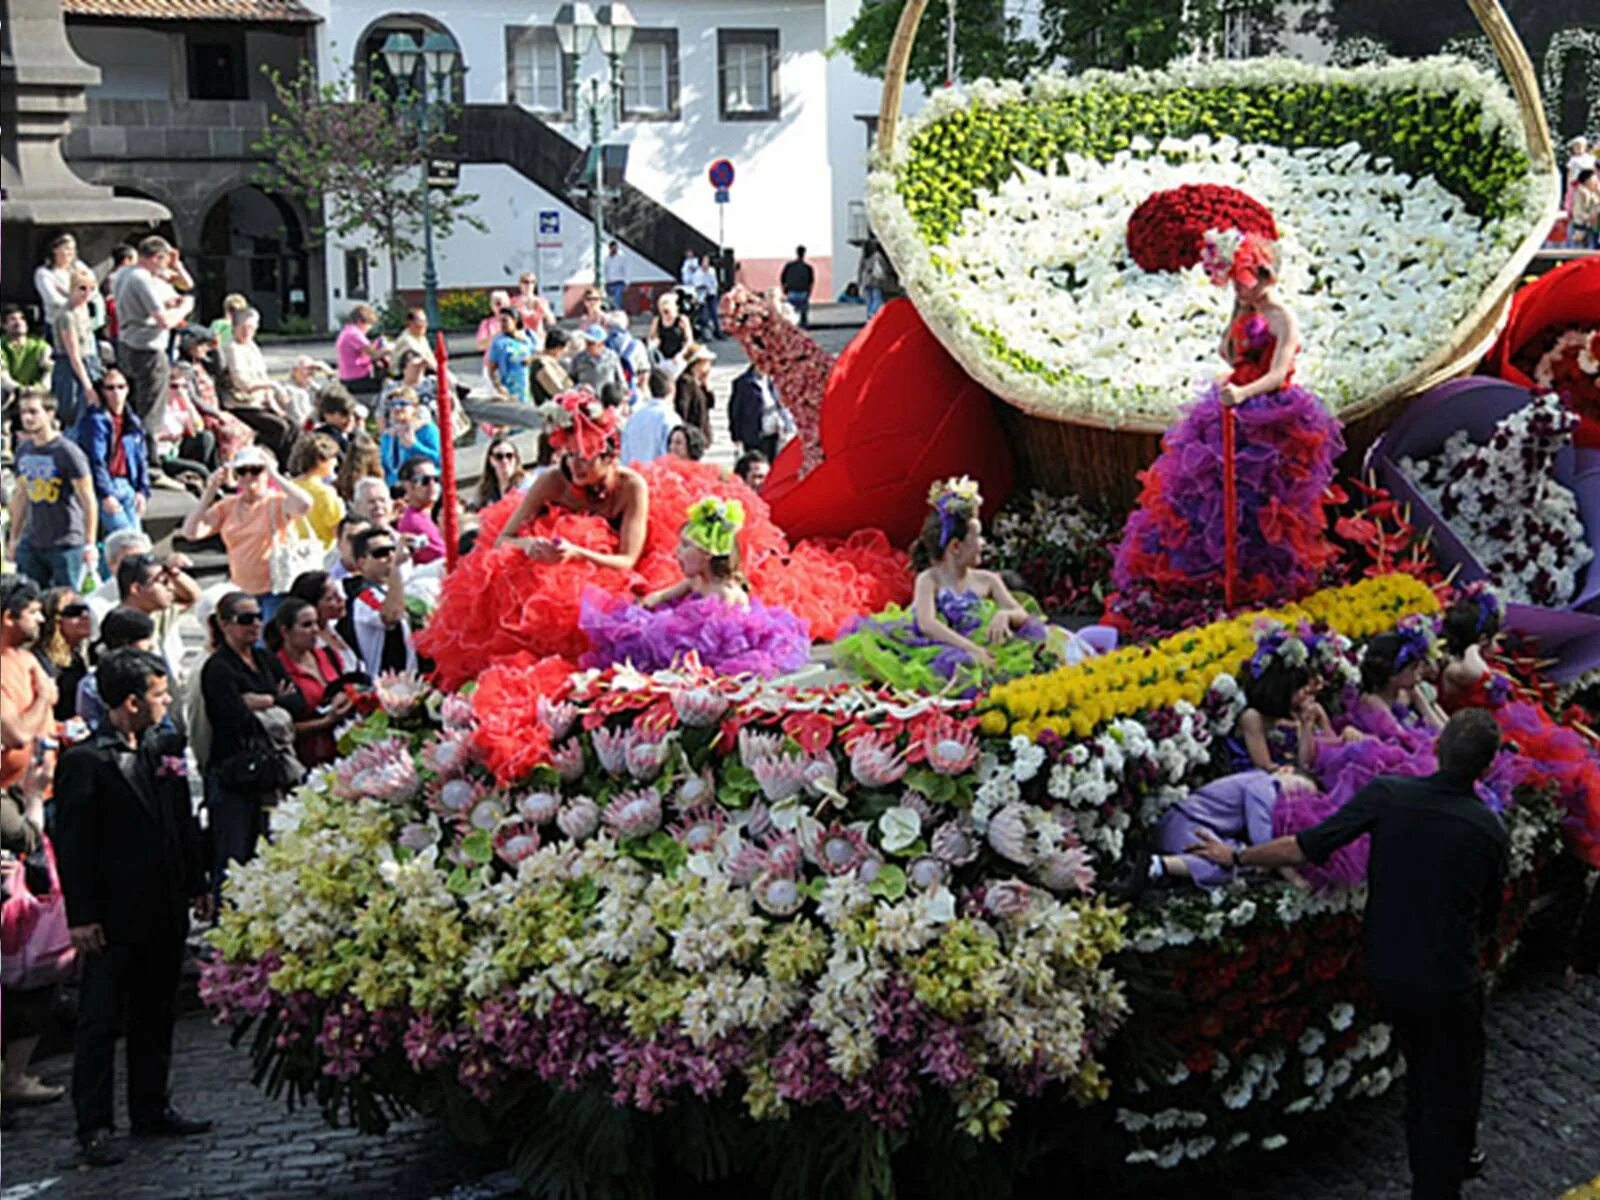 День фестиваля цветов. Фестиваль цветов на Мадейре. Мадейра Португалия фестиваль цветов. Фестиваль Коломбо Португалия. Фестивали в Португалии.